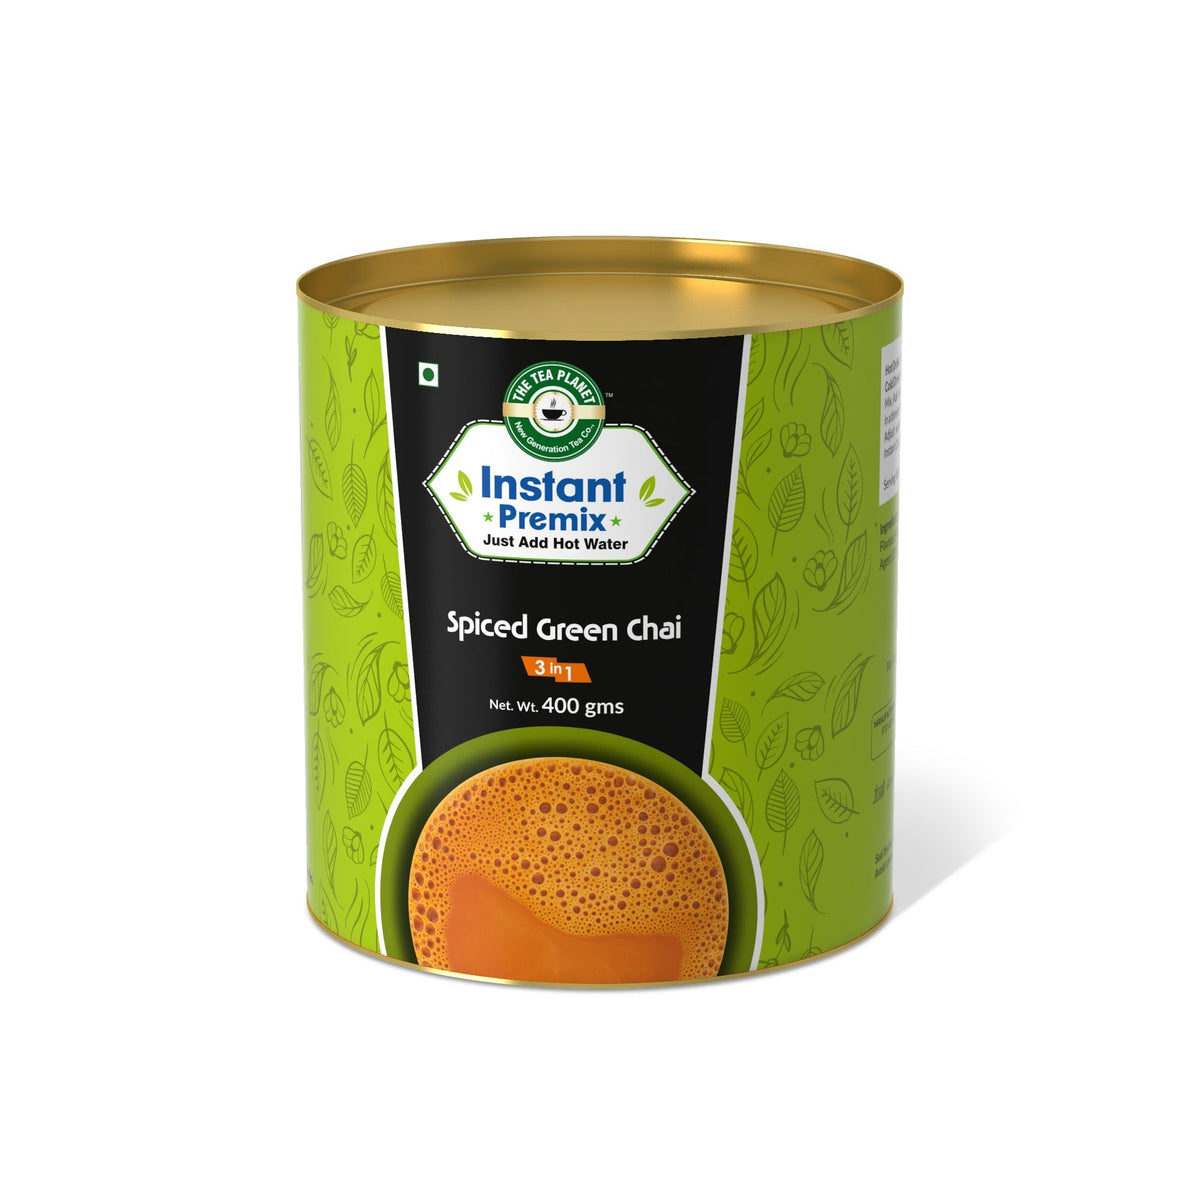 Spiced Green Chai Premix (3 in 1) - 400 gms